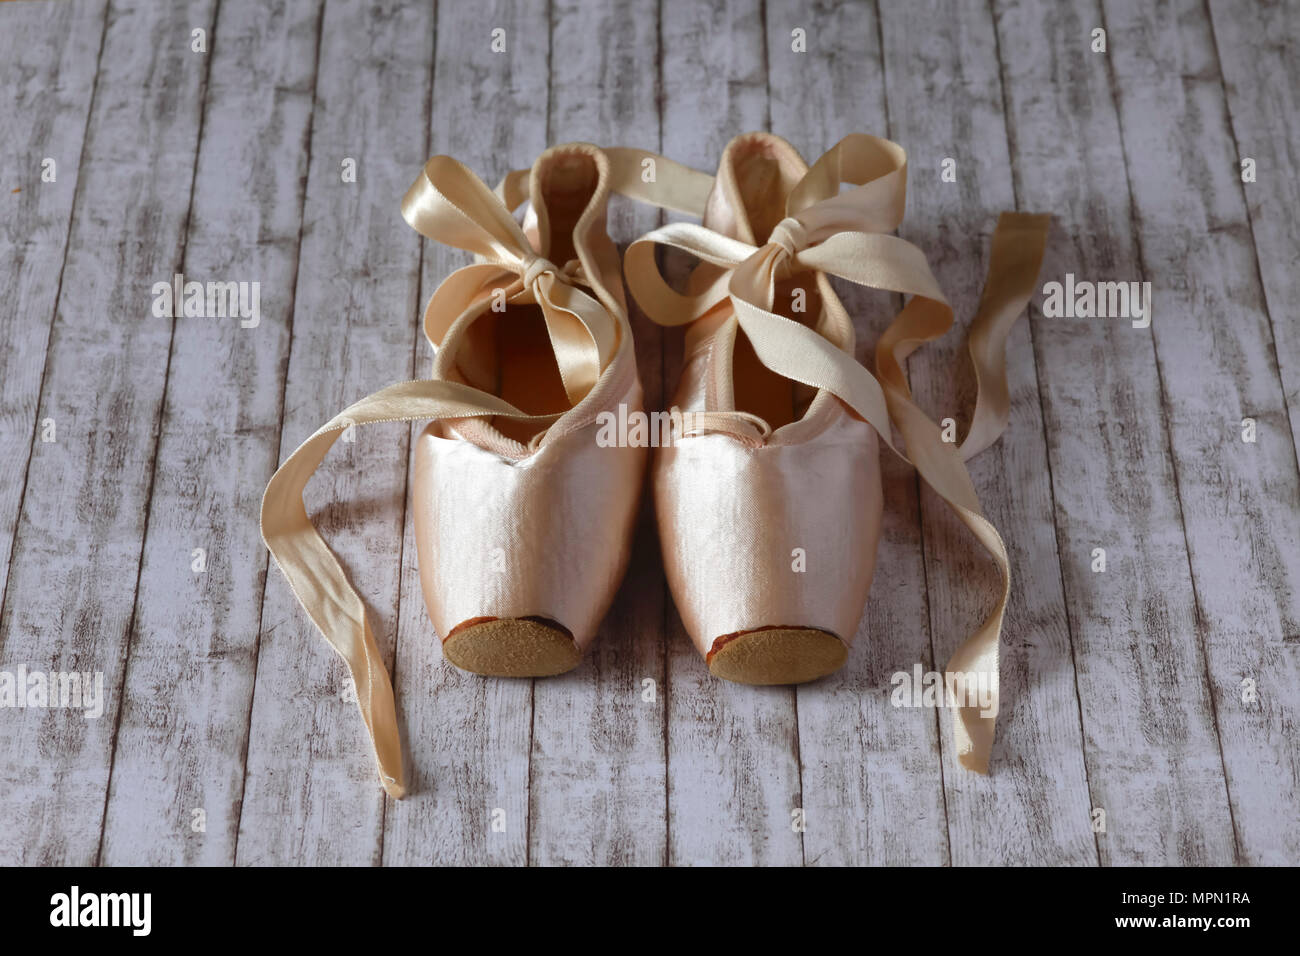 Ballet shoes Stock Photo